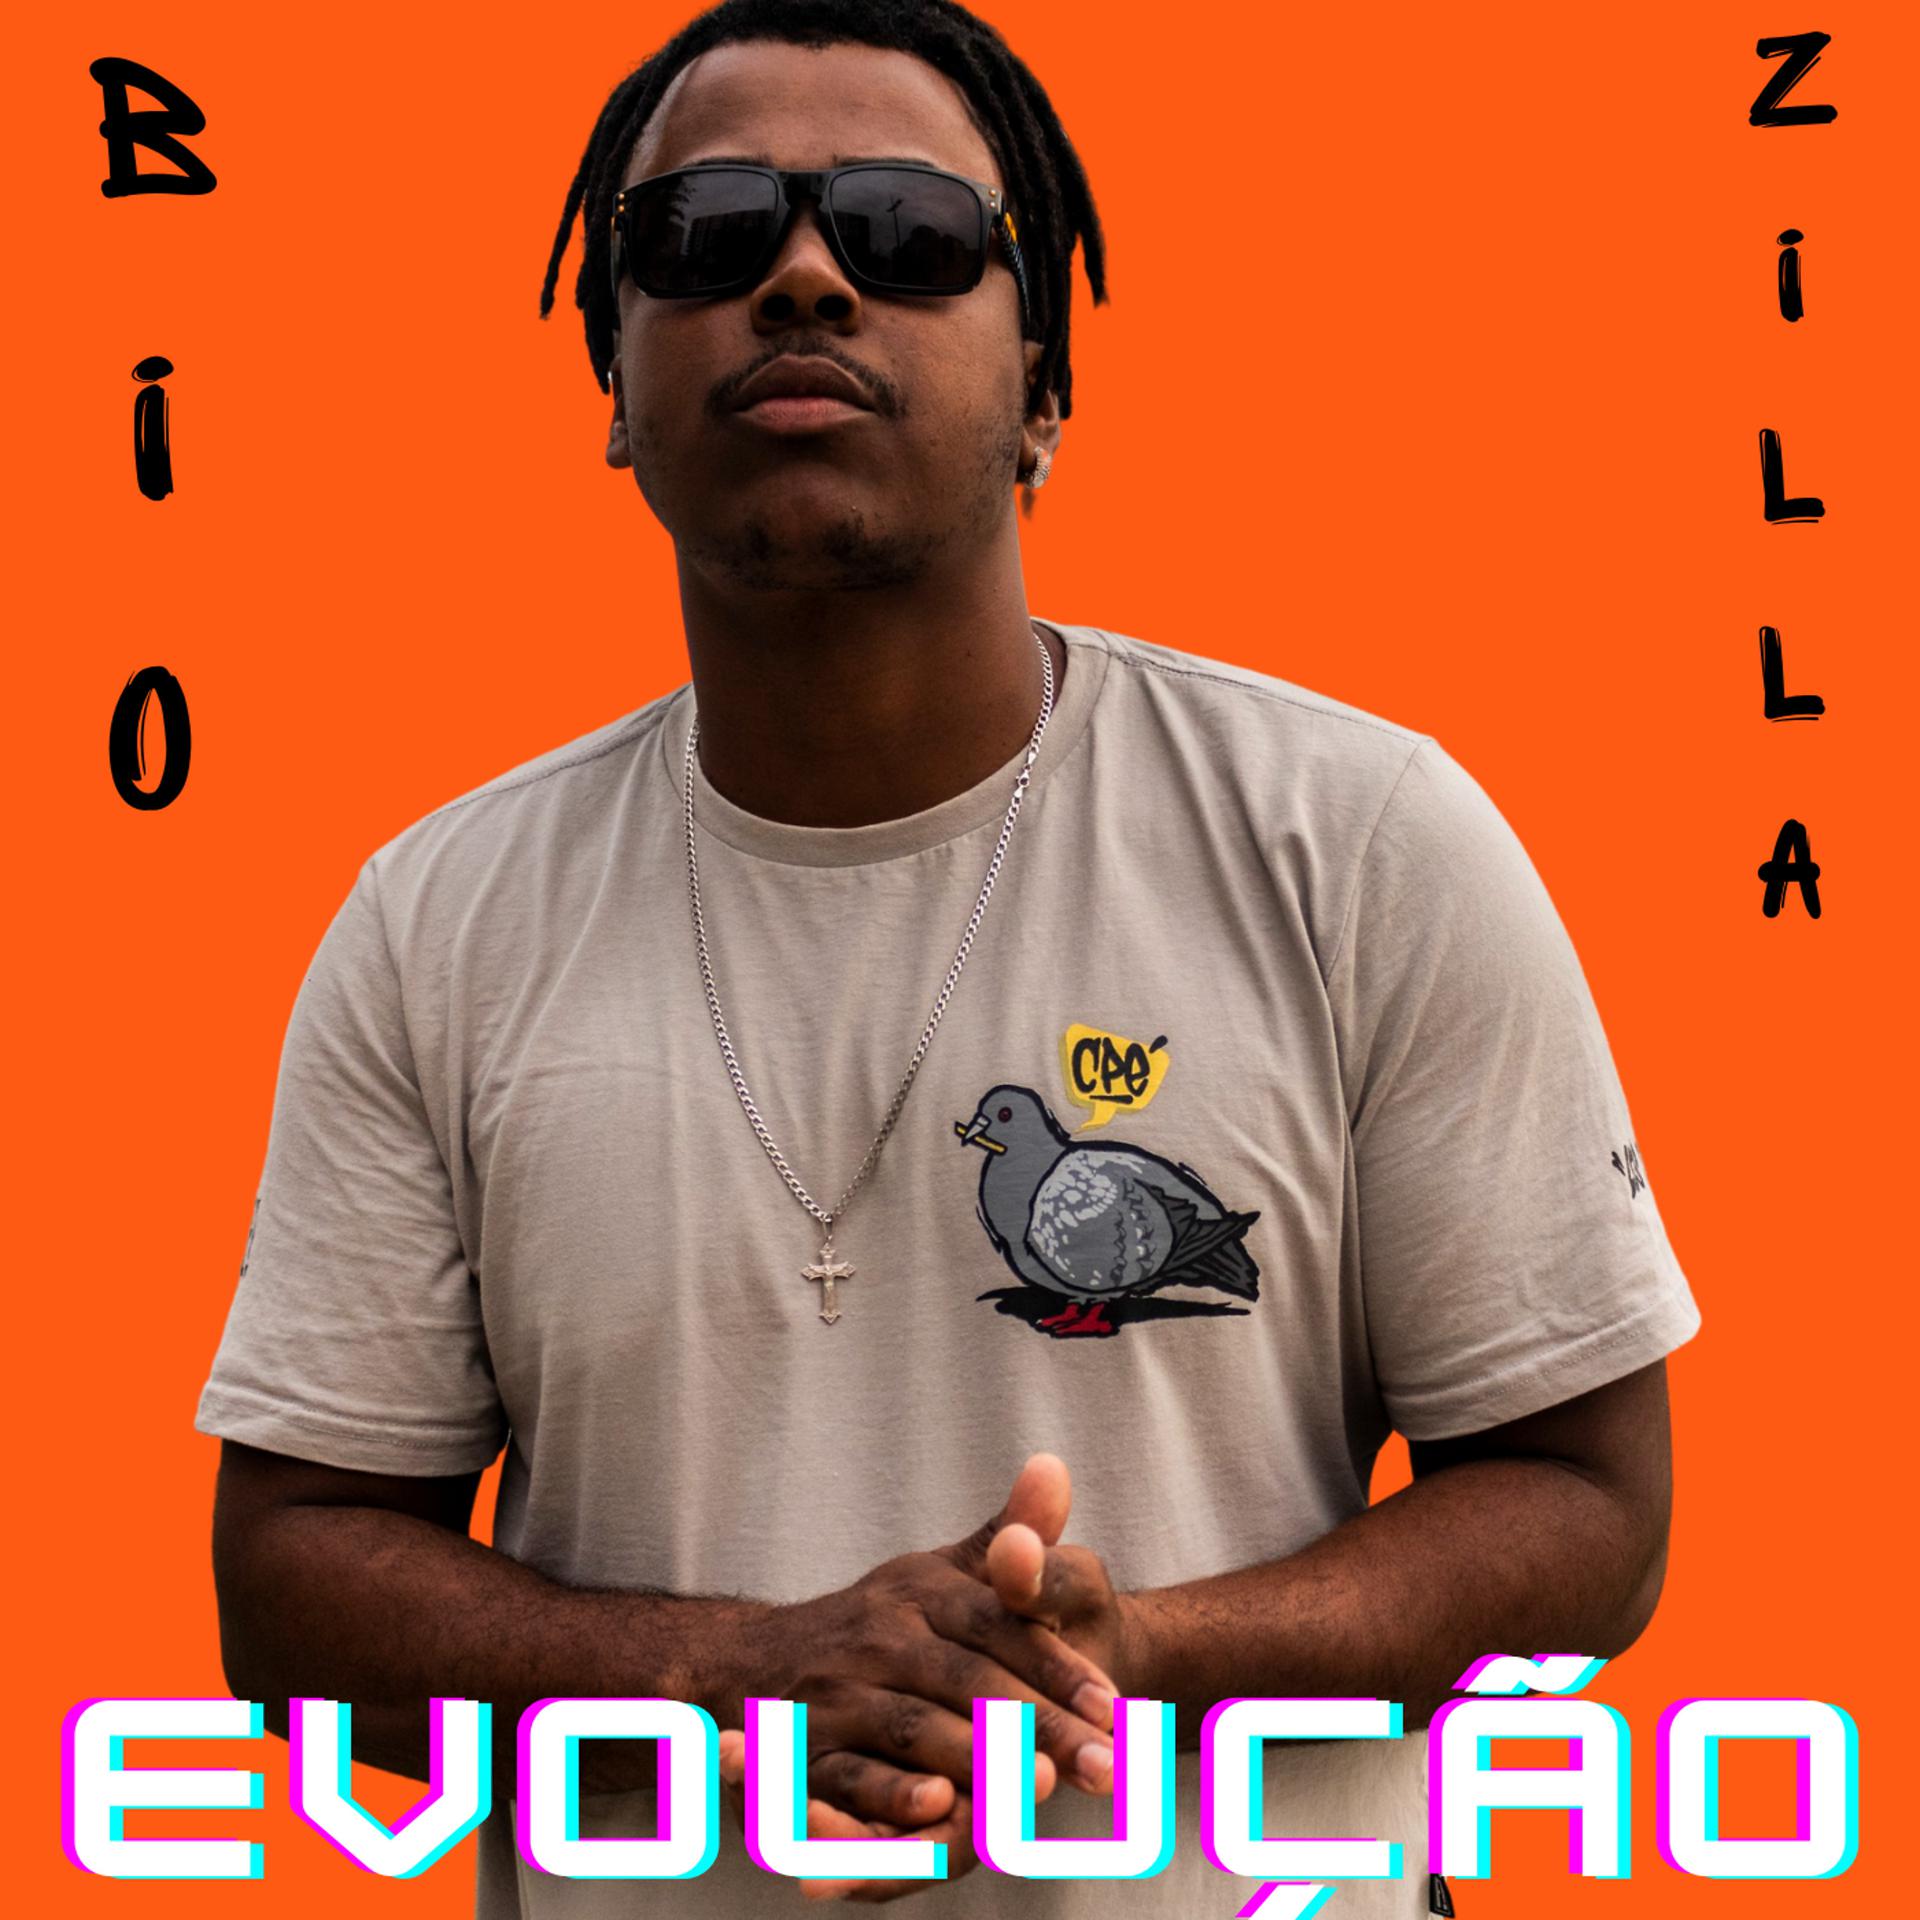 Постер альбома Evolução